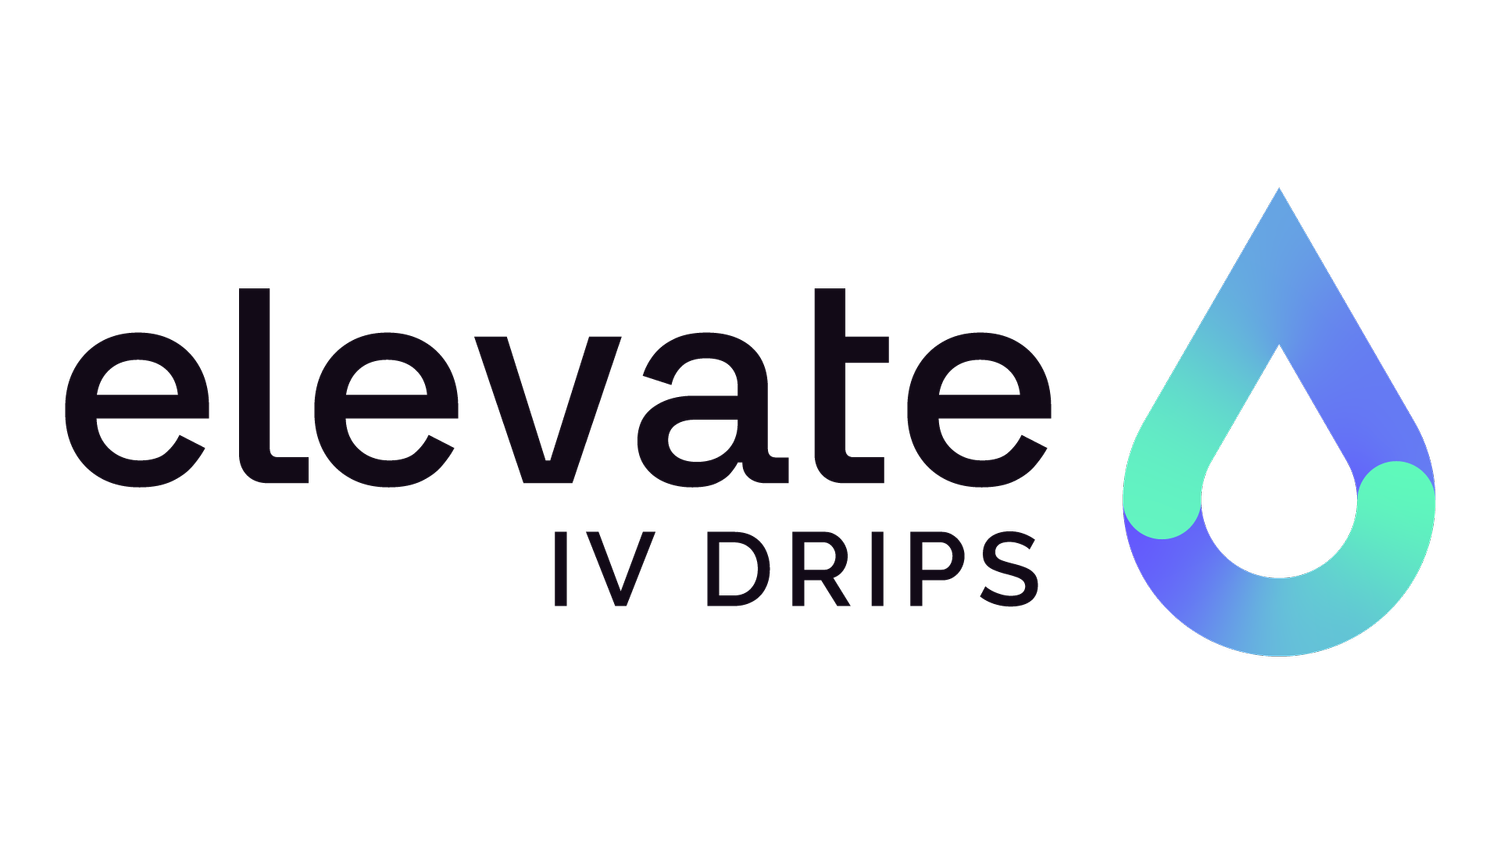 Elevate IV Drips